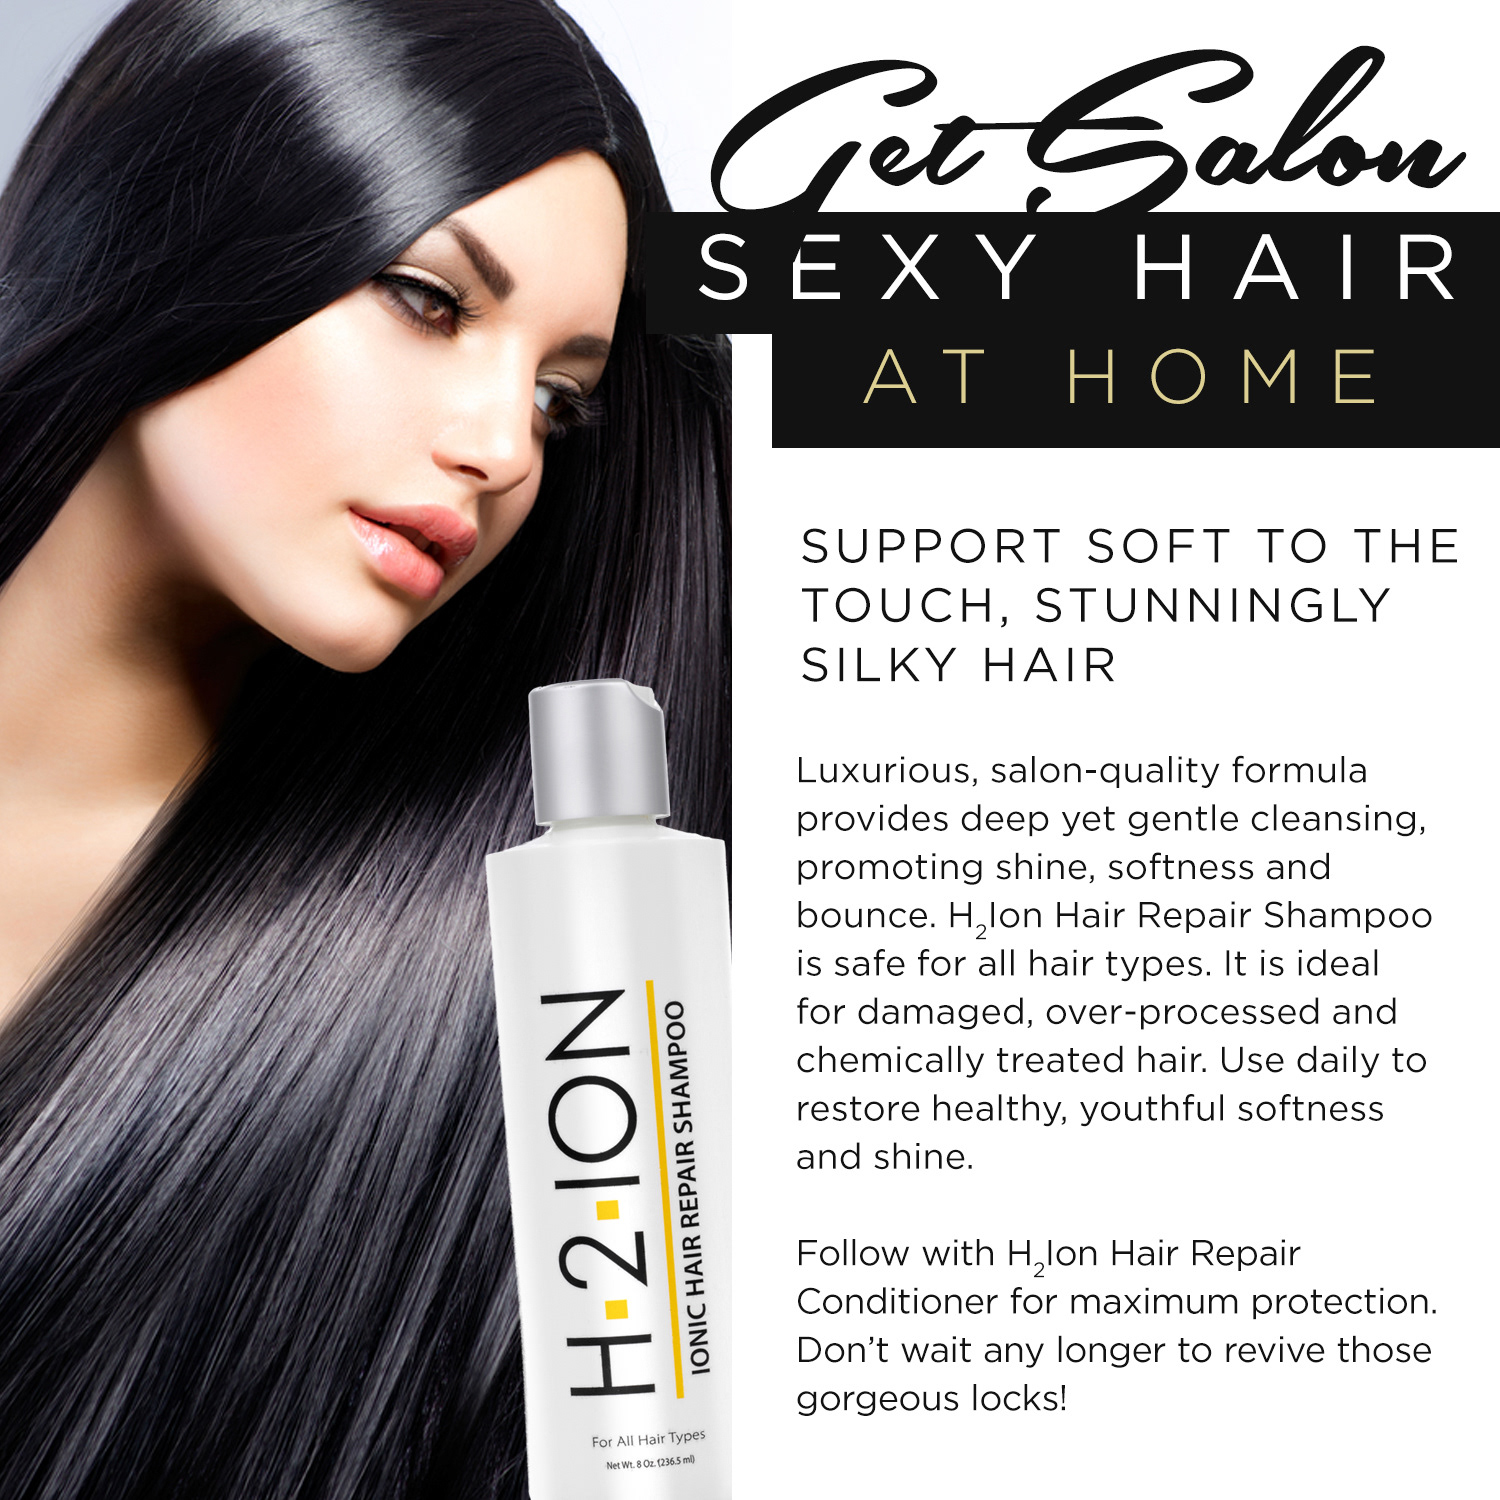 Beki Powell - H2ION HAIR REPAIR SHAMPOO- Web Advertisement Copy